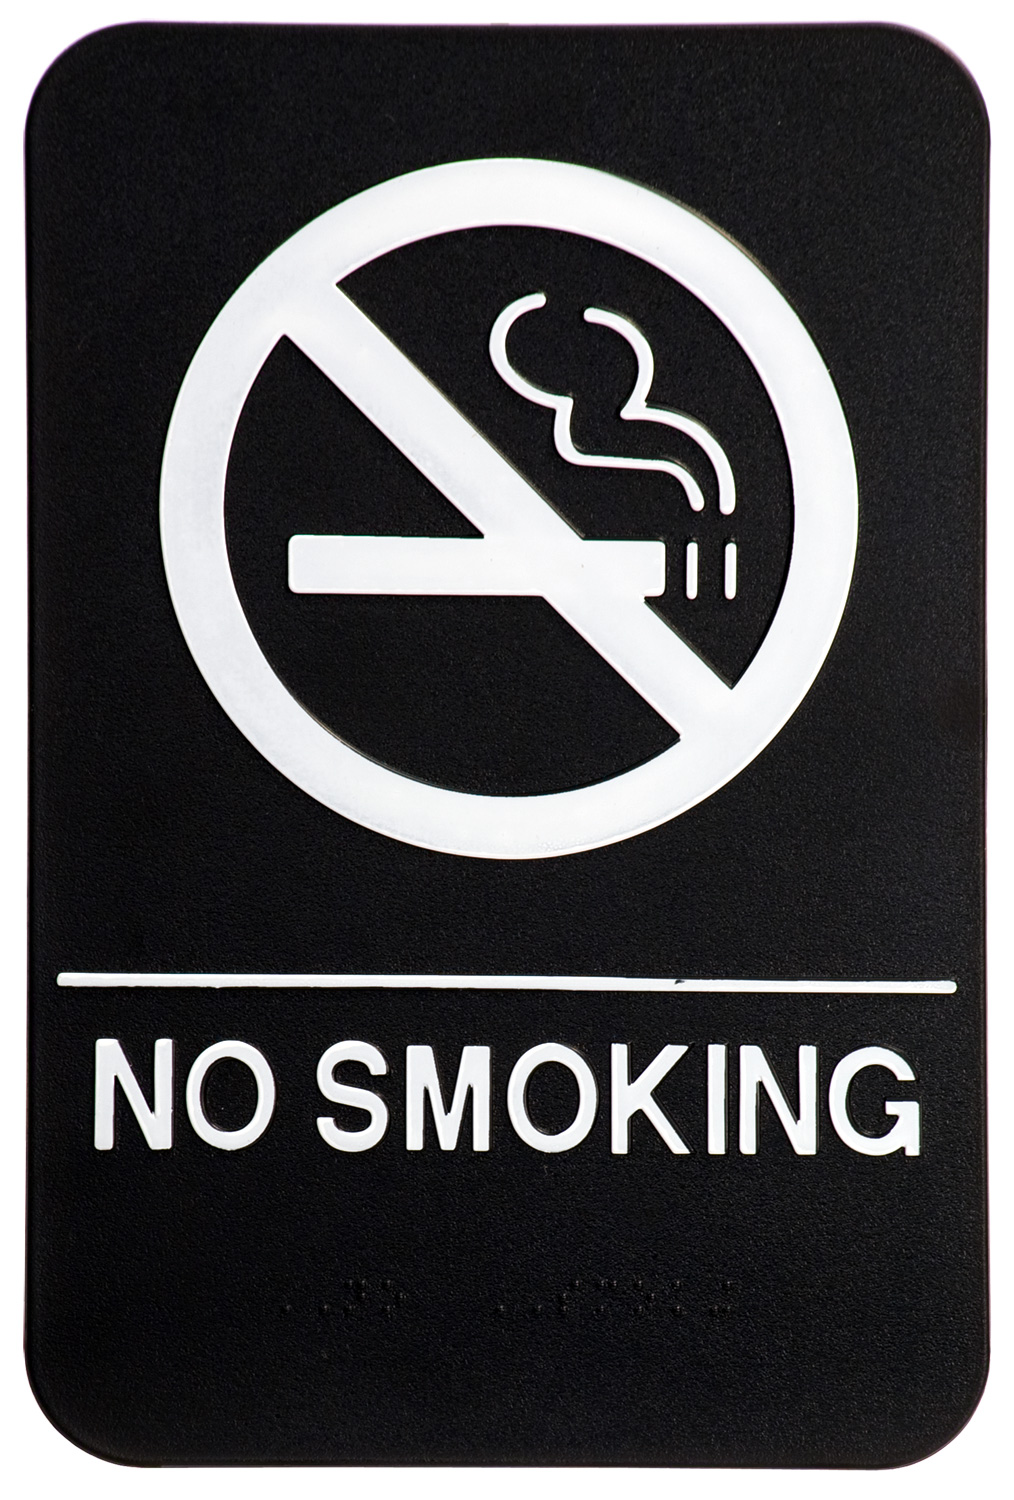 Black Ada  No Smoking  Sign  1 8  Thick  Raised White Text